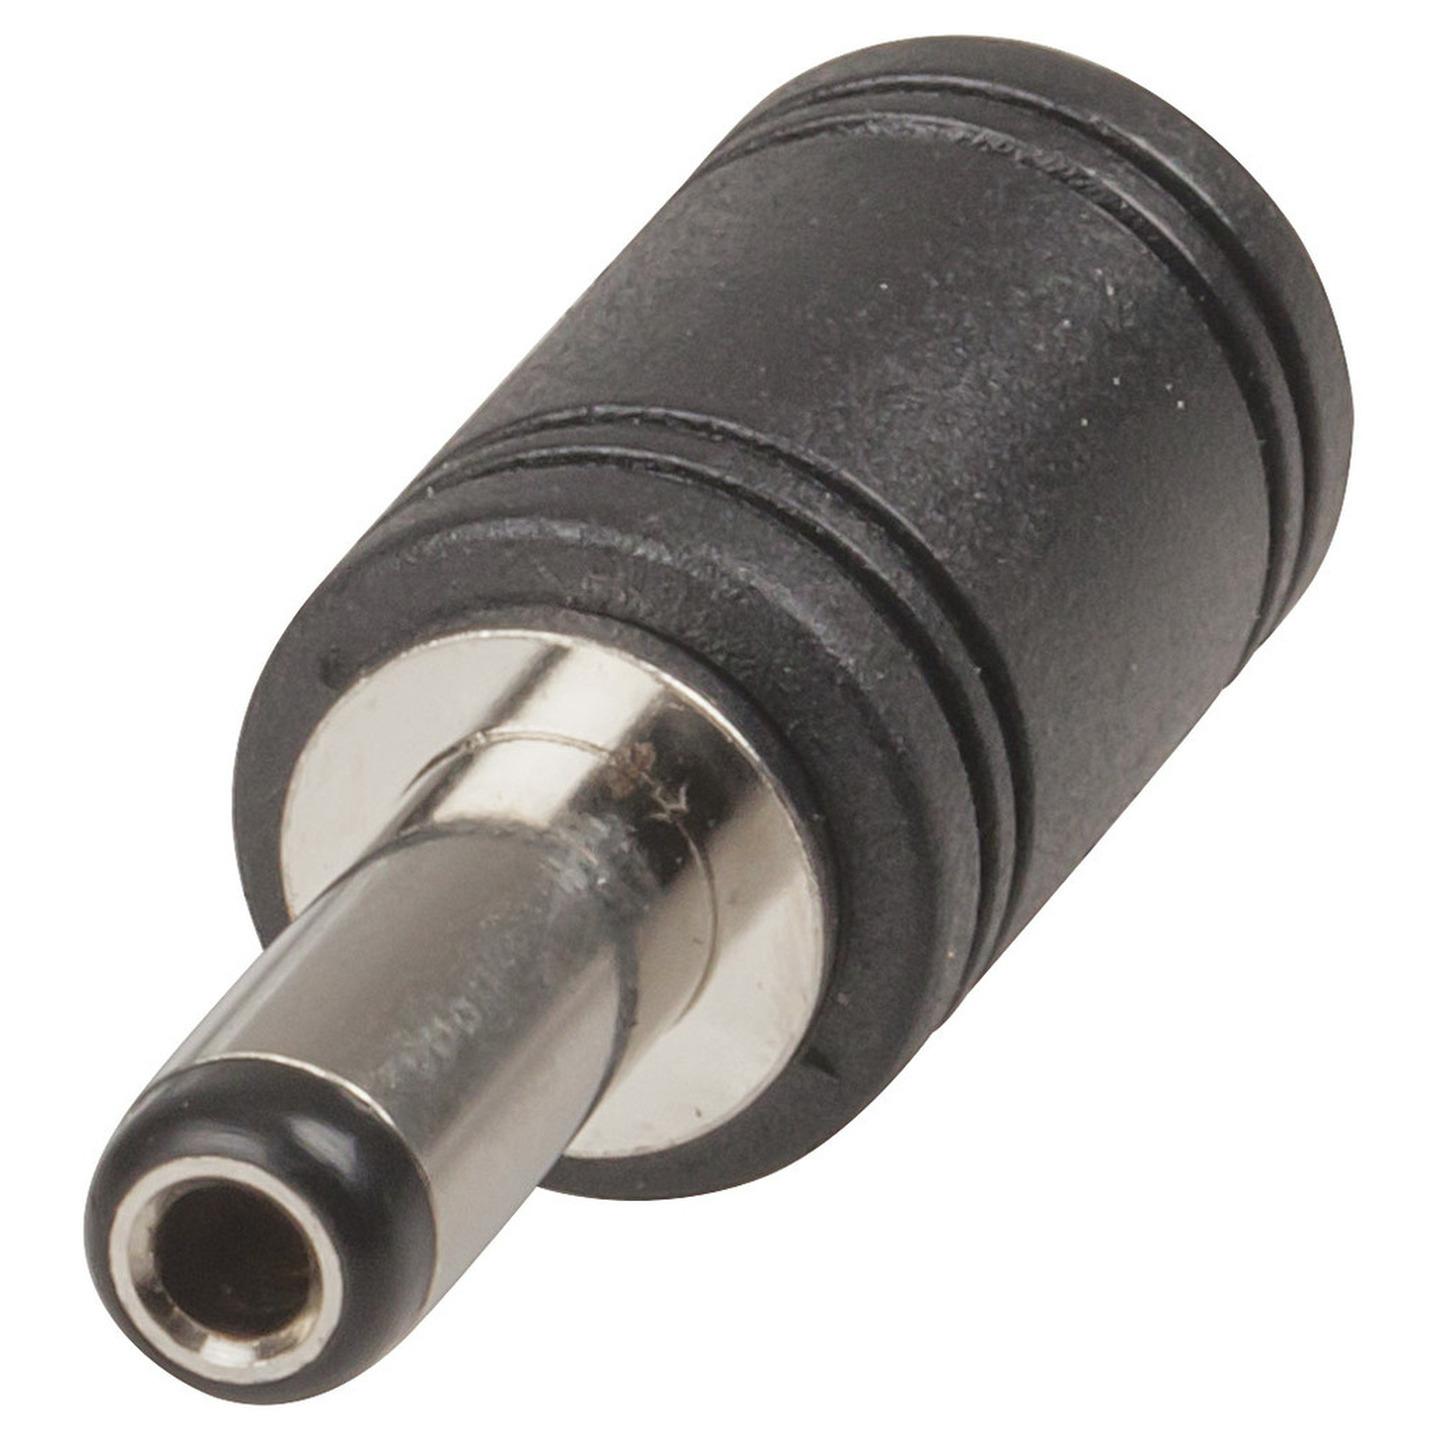 2.5mm DC Plug to 2.1mm DC Socket Power Adaptor